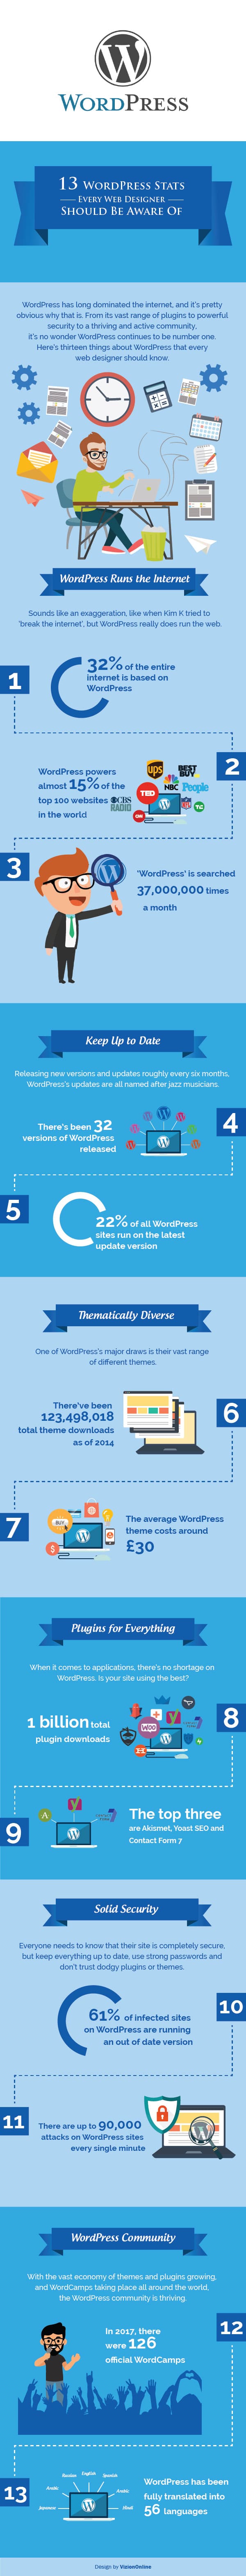 WordPress-Infographic